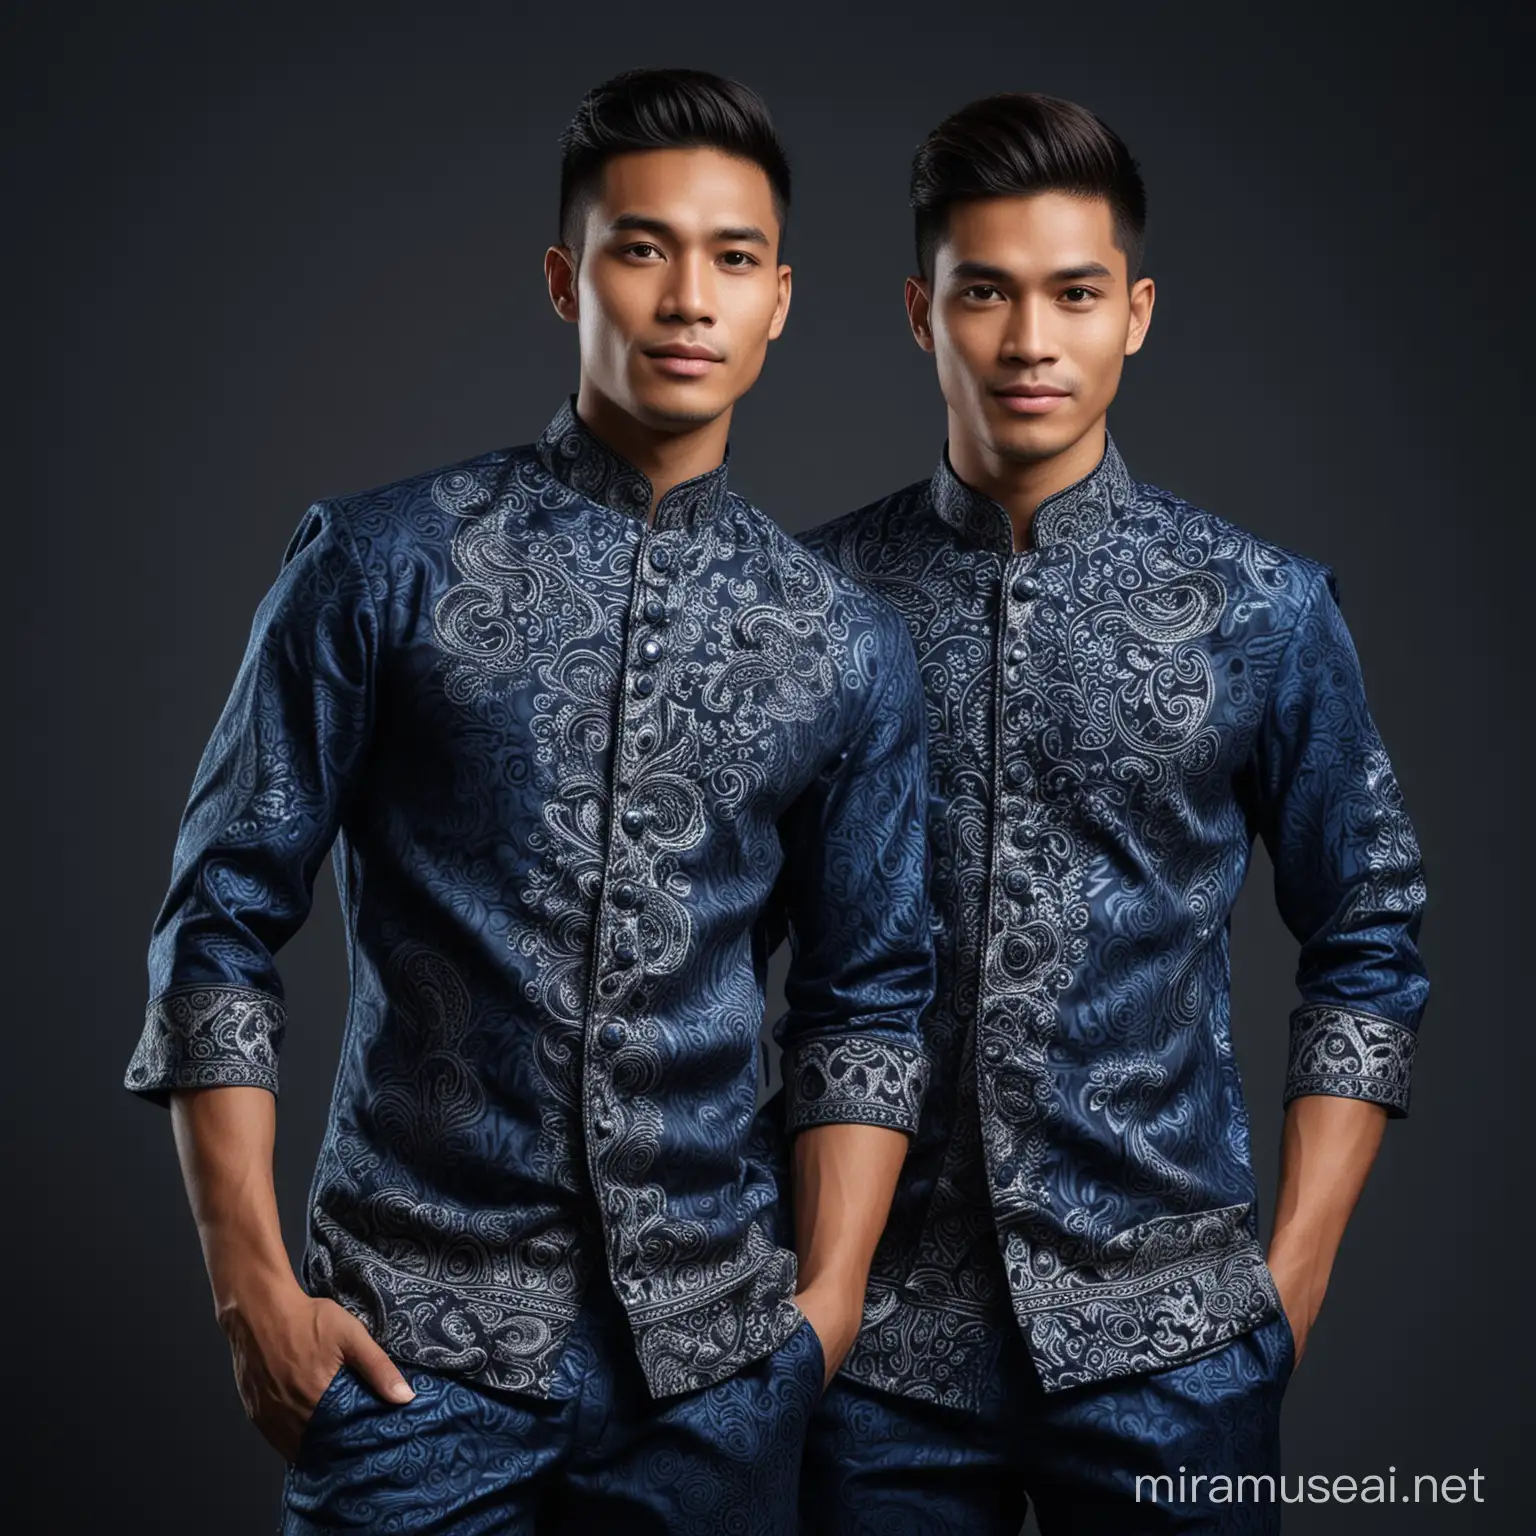 Dua orang laki laki muda ganteng ,wajah indonesia, berseragam biru batik mewah.
Foto setengah badan ,baiground layar studio hitam 